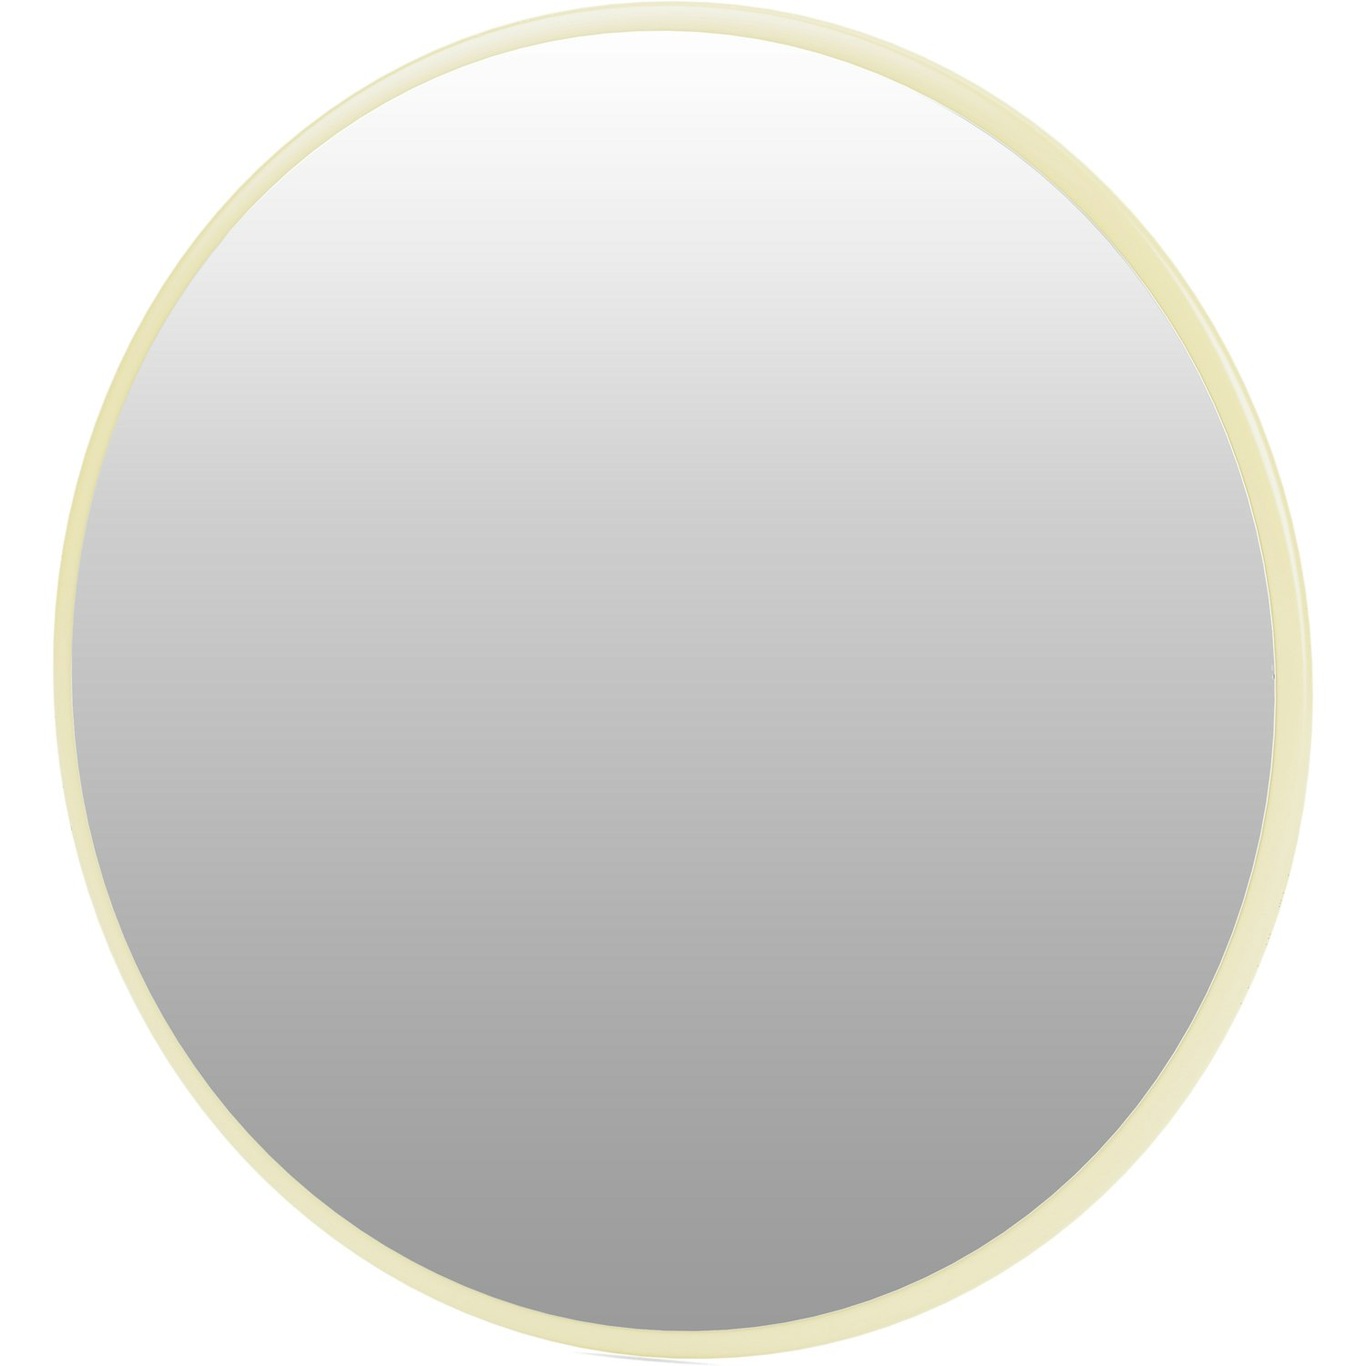 https://royaldesign.com/image/13/montana-mini-spiegel-mci-1?w=800&quality=80